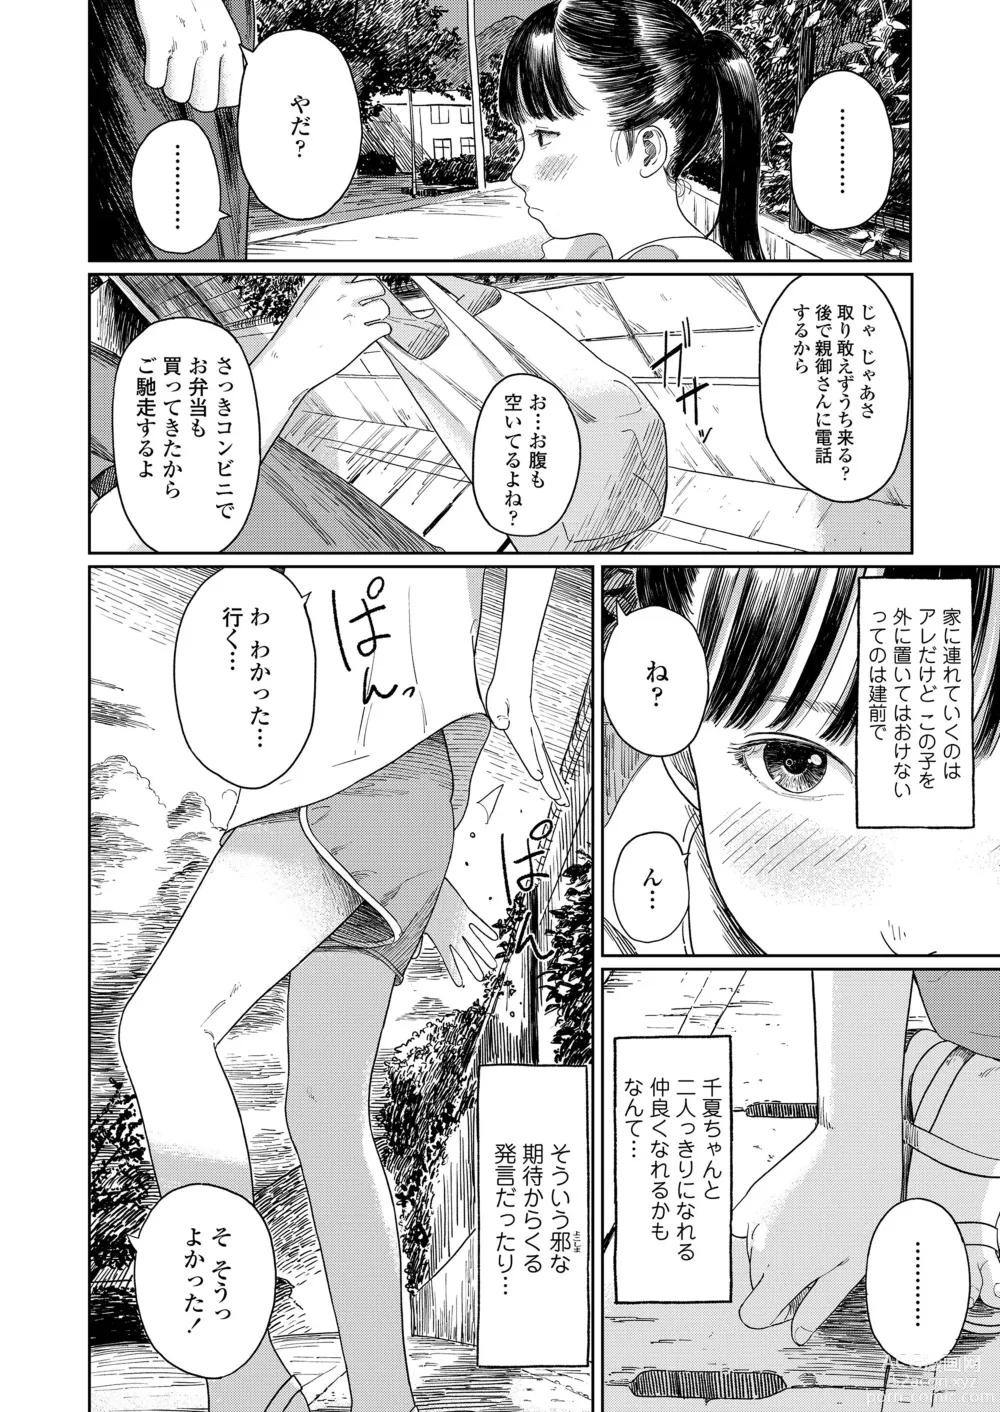 Page 6 of manga COMIC LOE VOL.4 NEXT